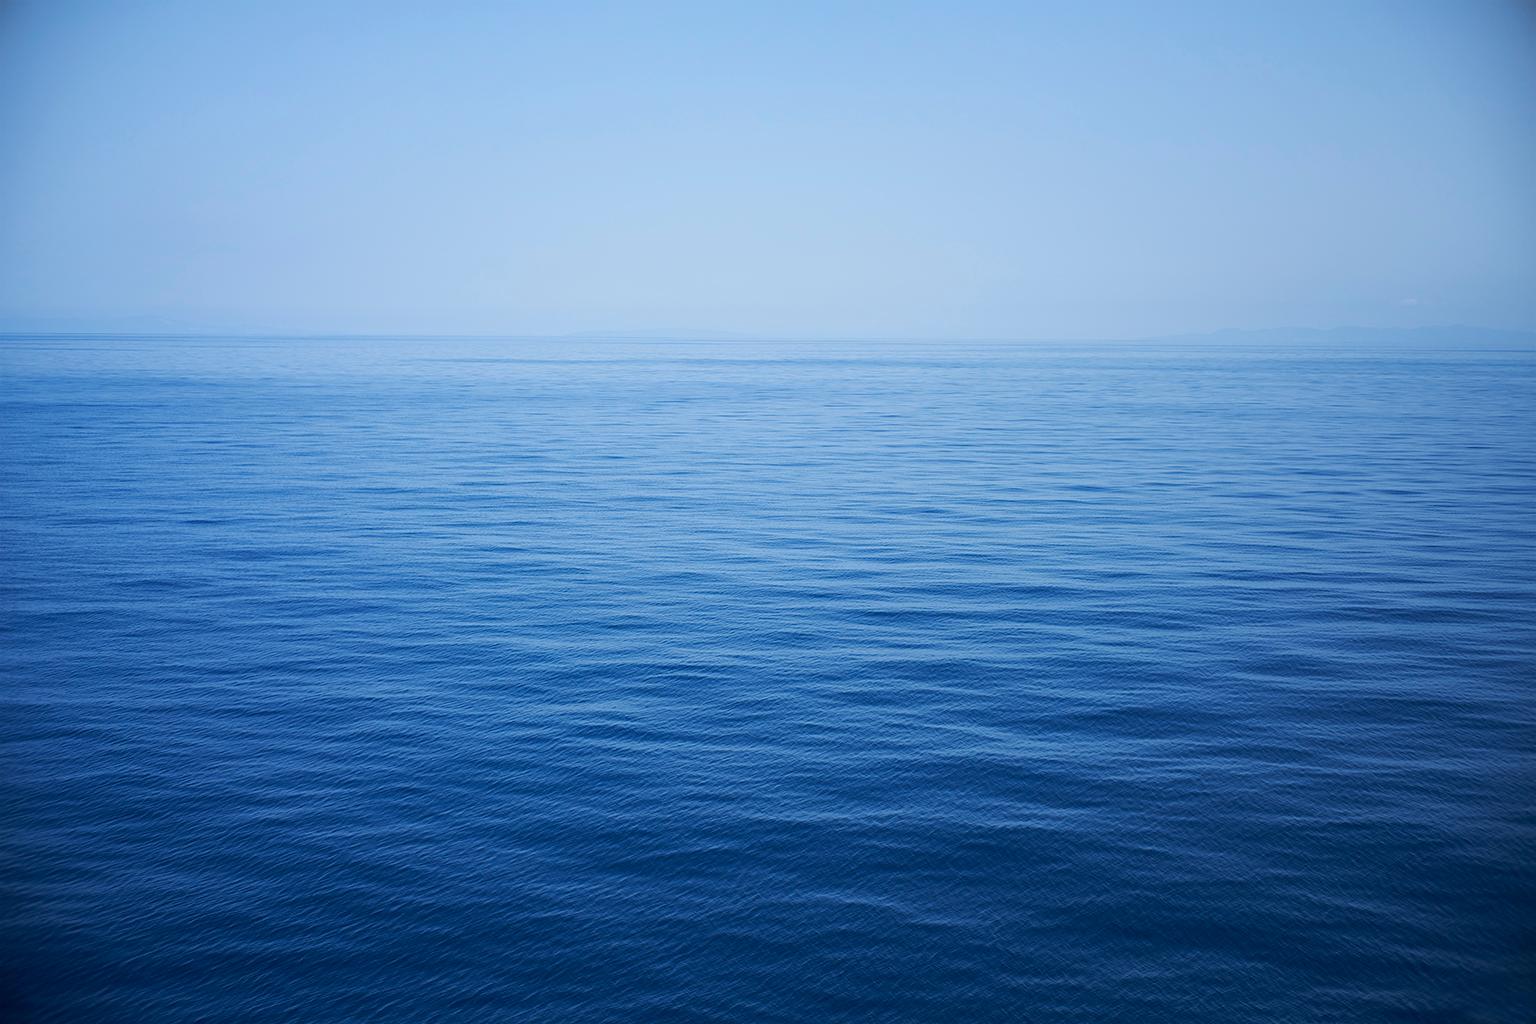 Frank Schott Landscape Print - Seascape X - large format photograph of monochrome blu water surface and horizon